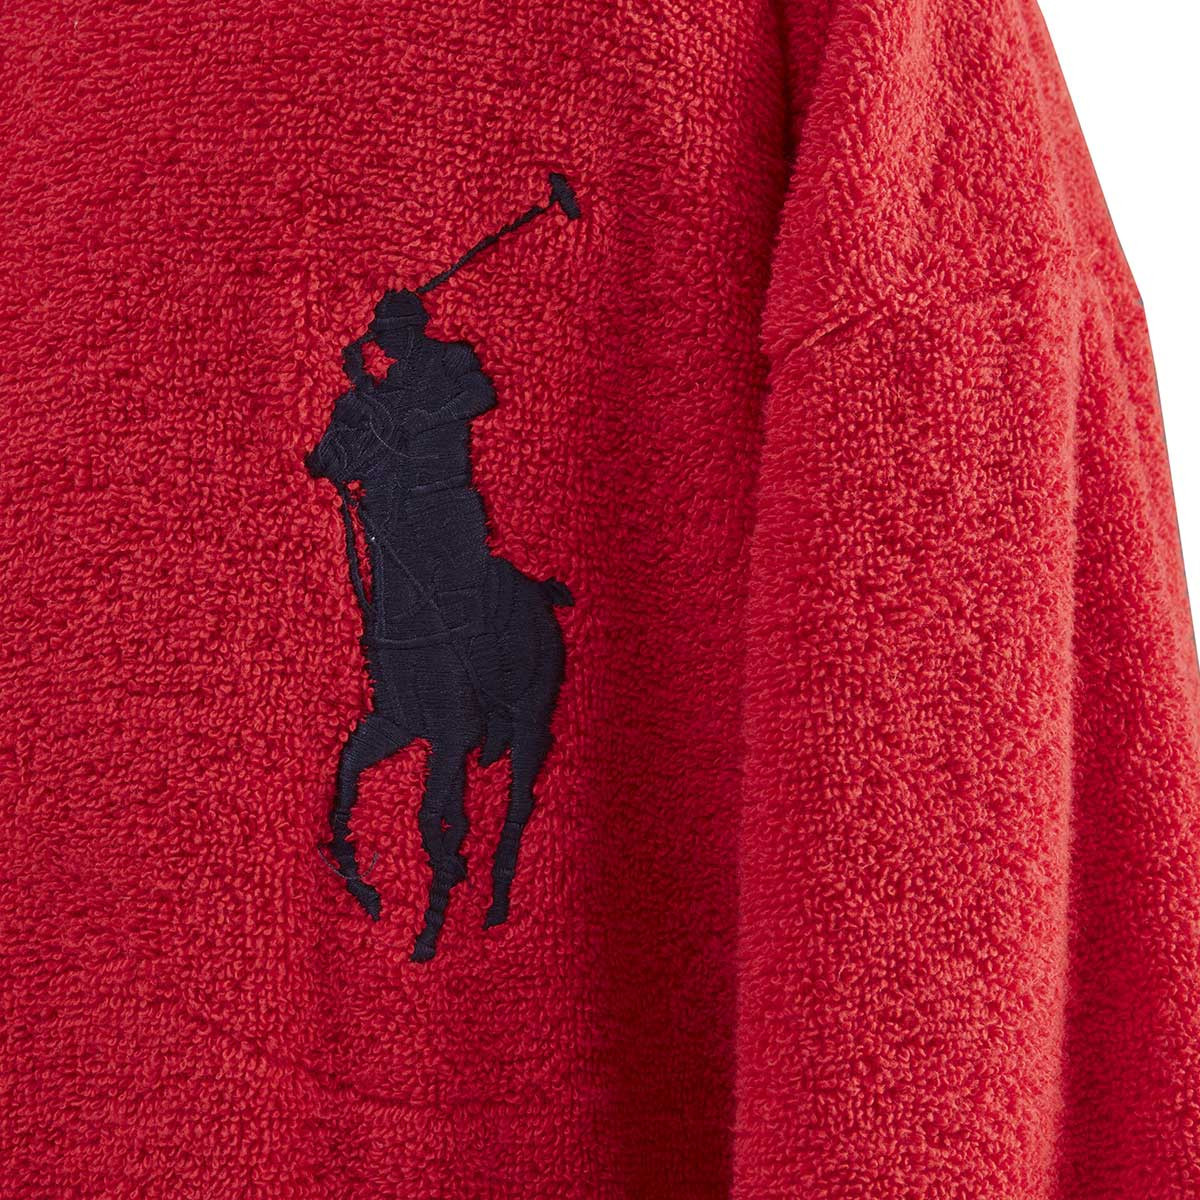 халат кимоно Ralph Lauren Polo Player - купить в магазине Yves Delorme Russia